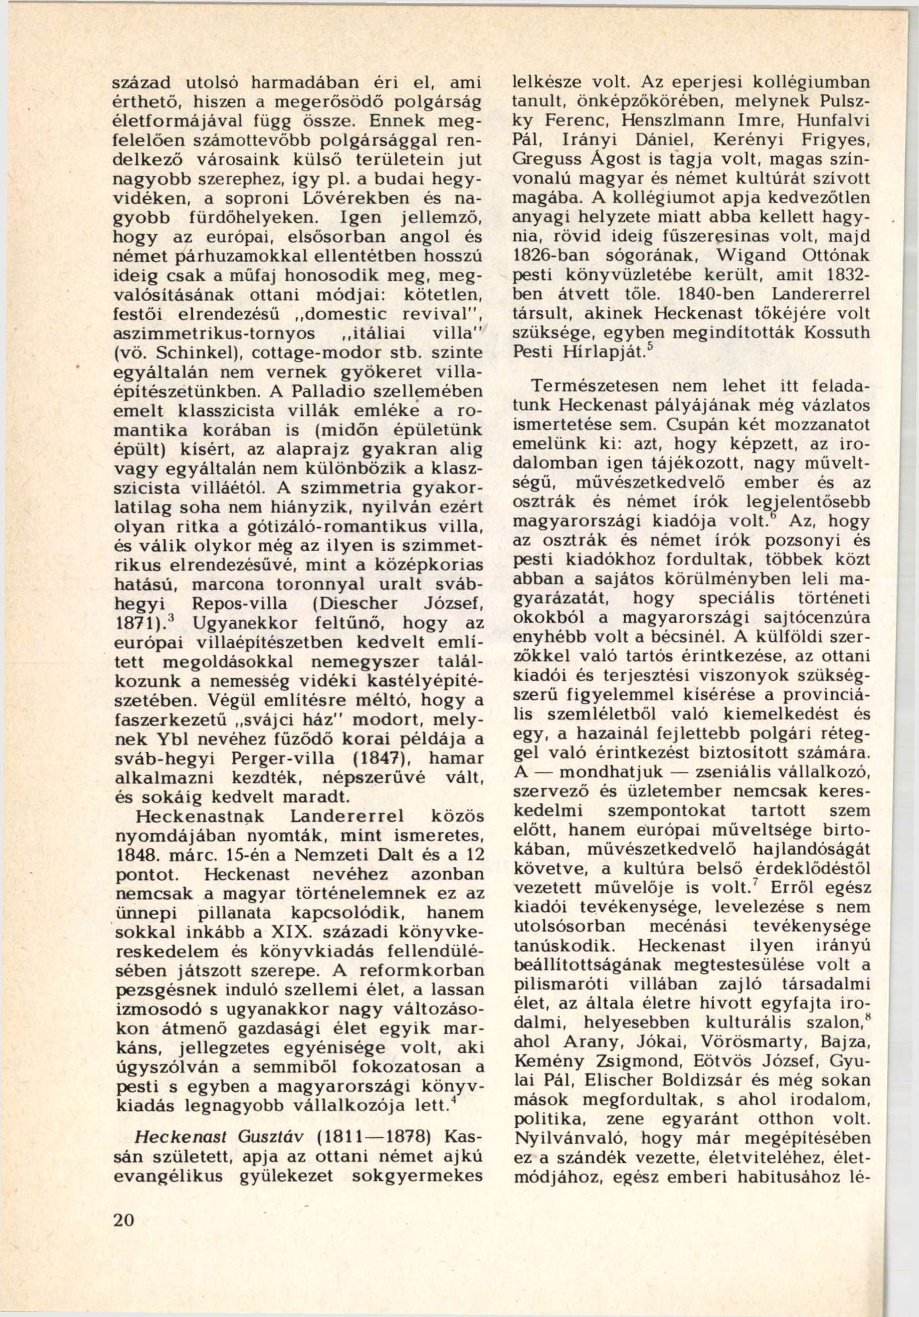 muemlekvedelem_1984_pages22-22.jpg